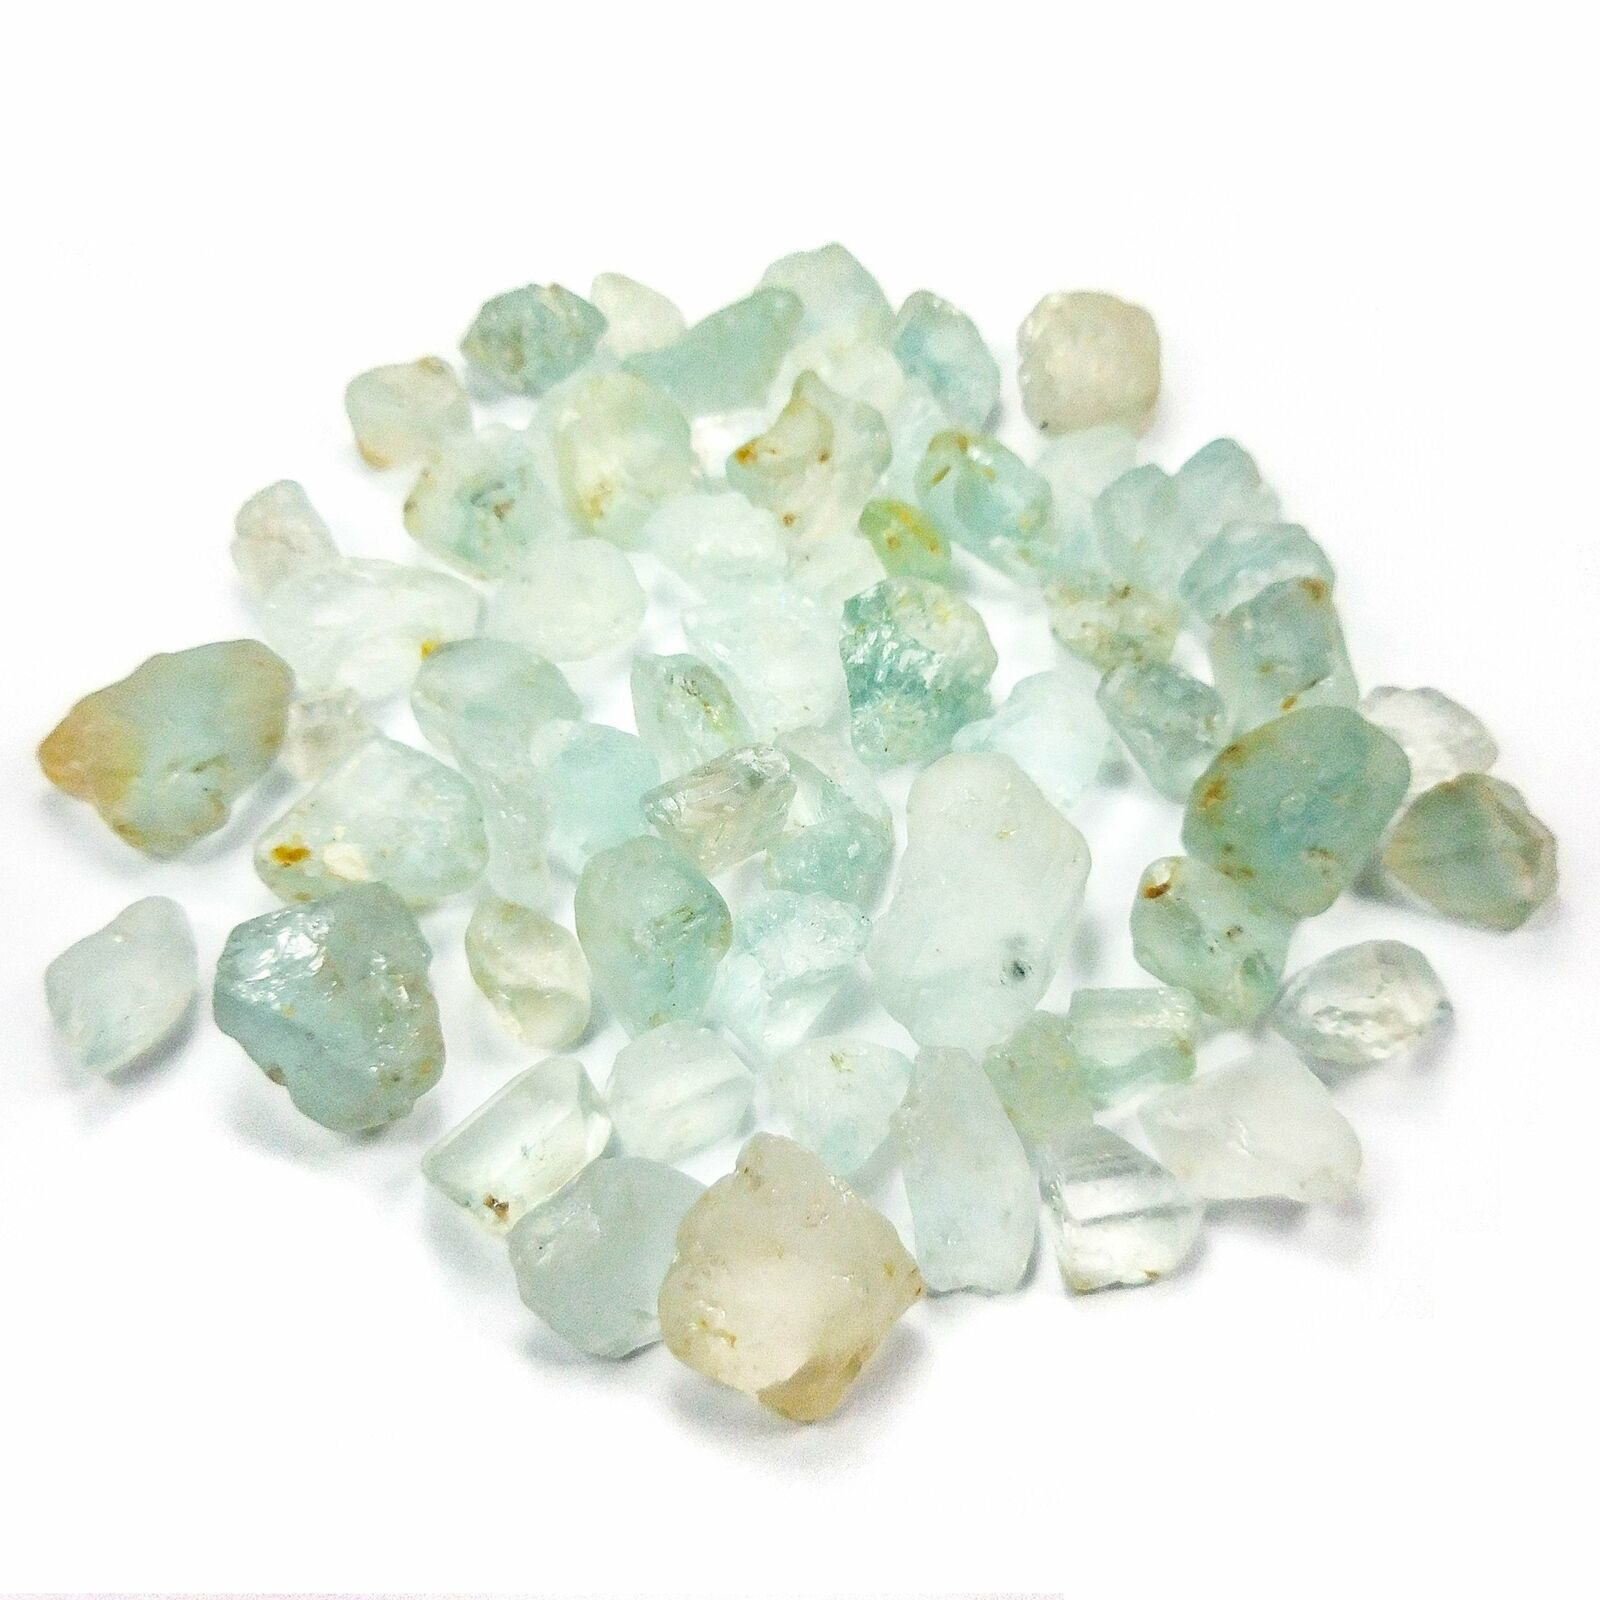 Bulk Wholesale Lot 100 Grams - Blue Topaz - Rough Raw Stones Natural Gemstones